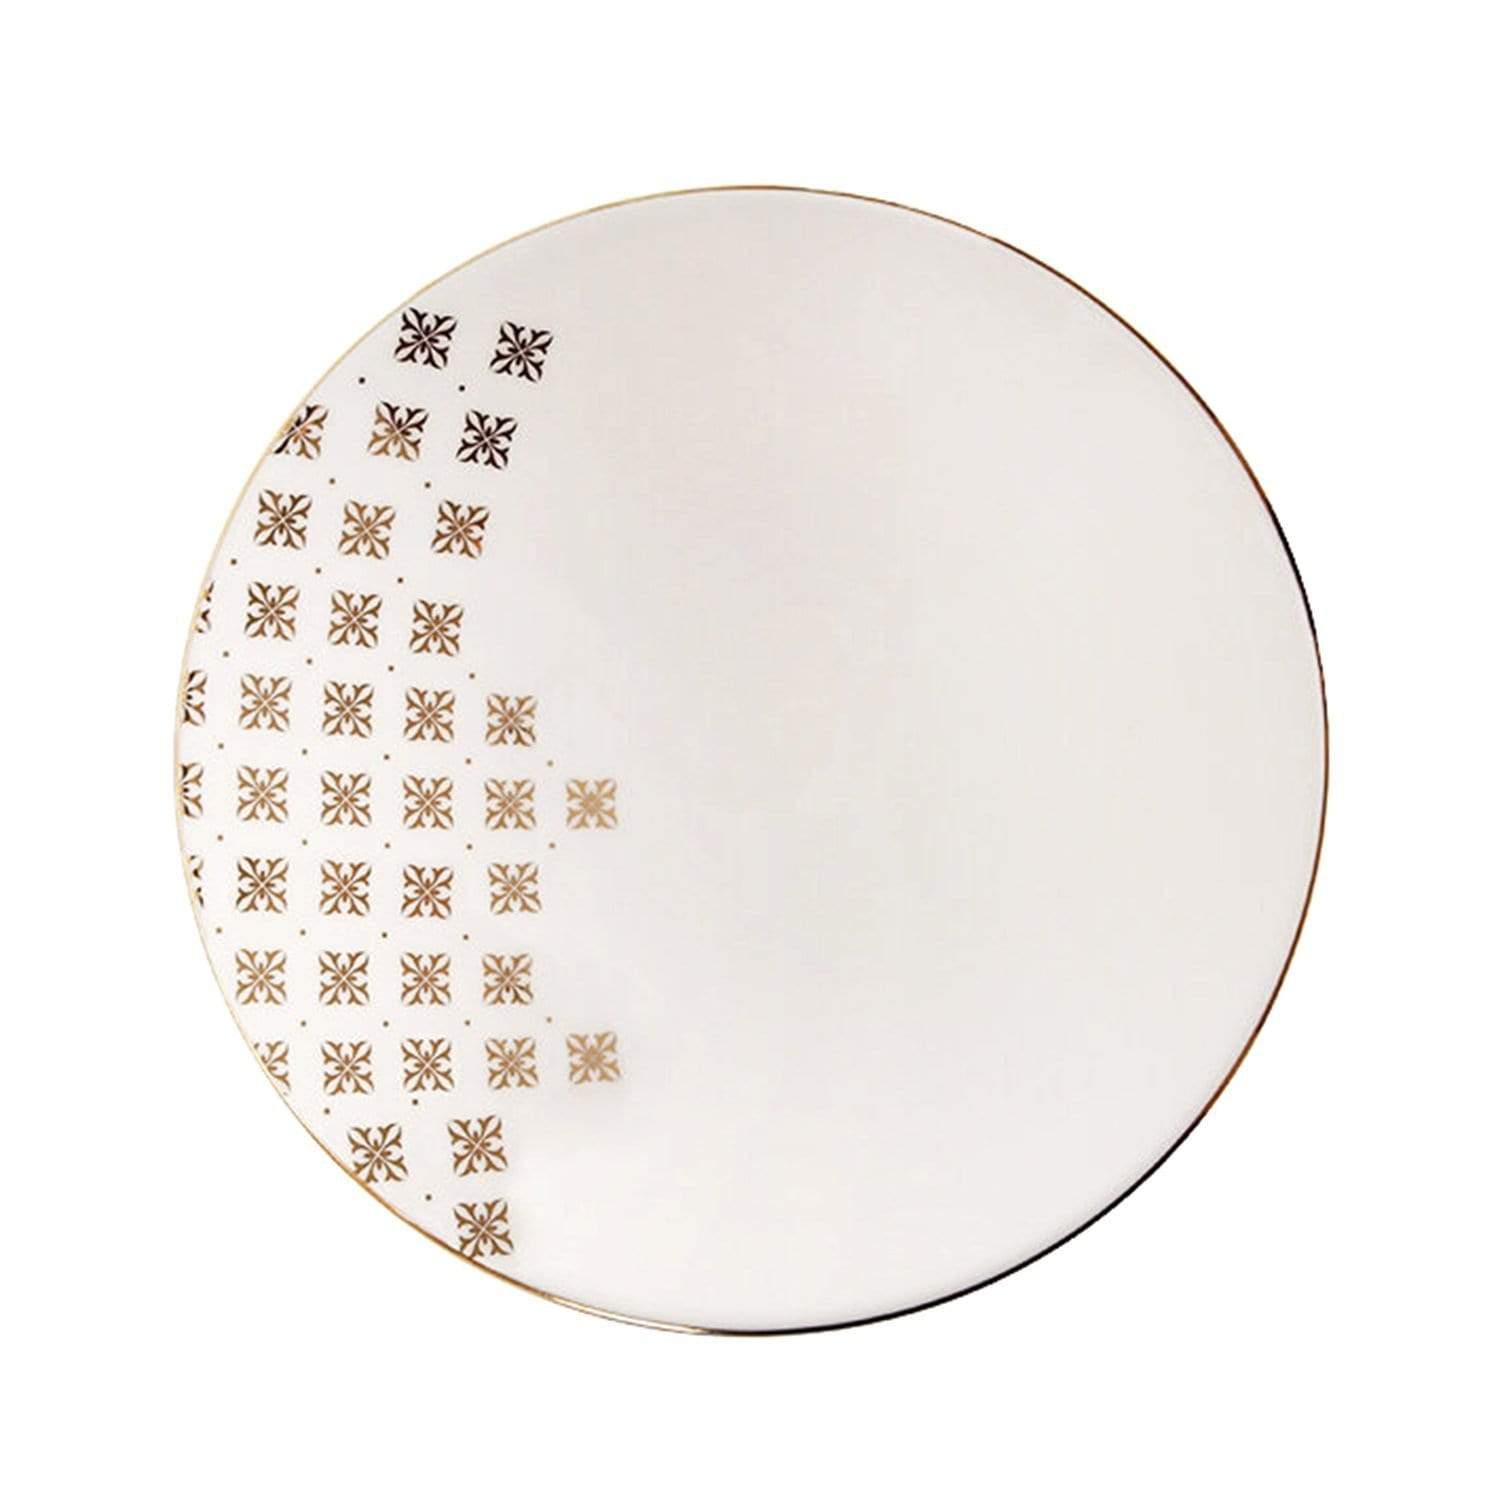 Porland Porselen Evoke 25 cm Bowl - Cream and Gold - 04ALM002718 - Jashanmal Home